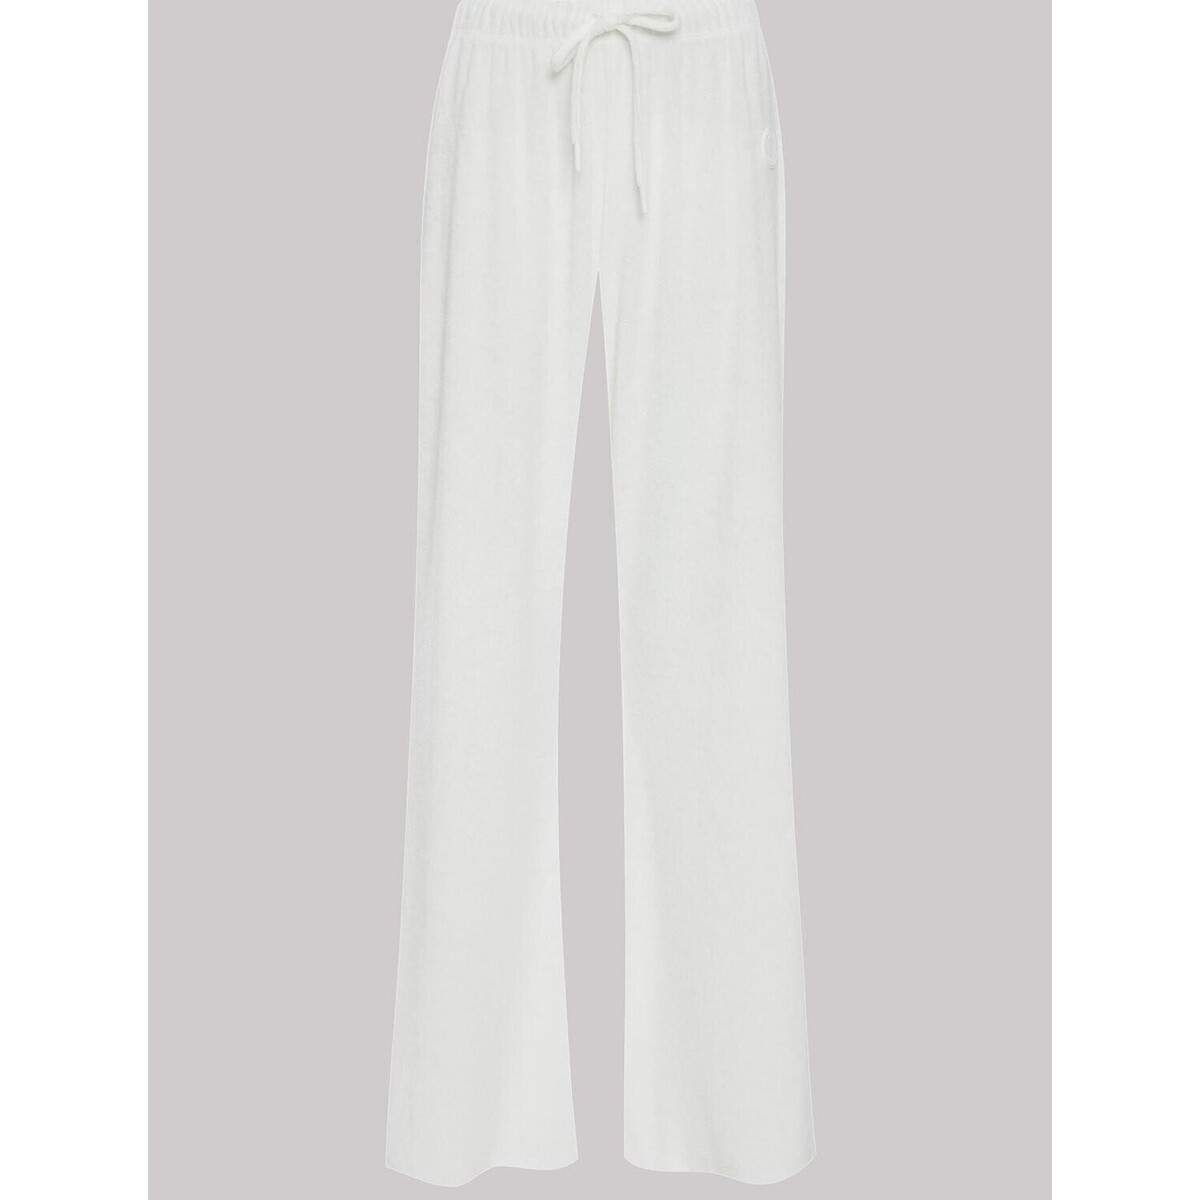 textil Mujer Pantalones Bsb PANTALÓN  049 212013 OFF WHITE Multicolor